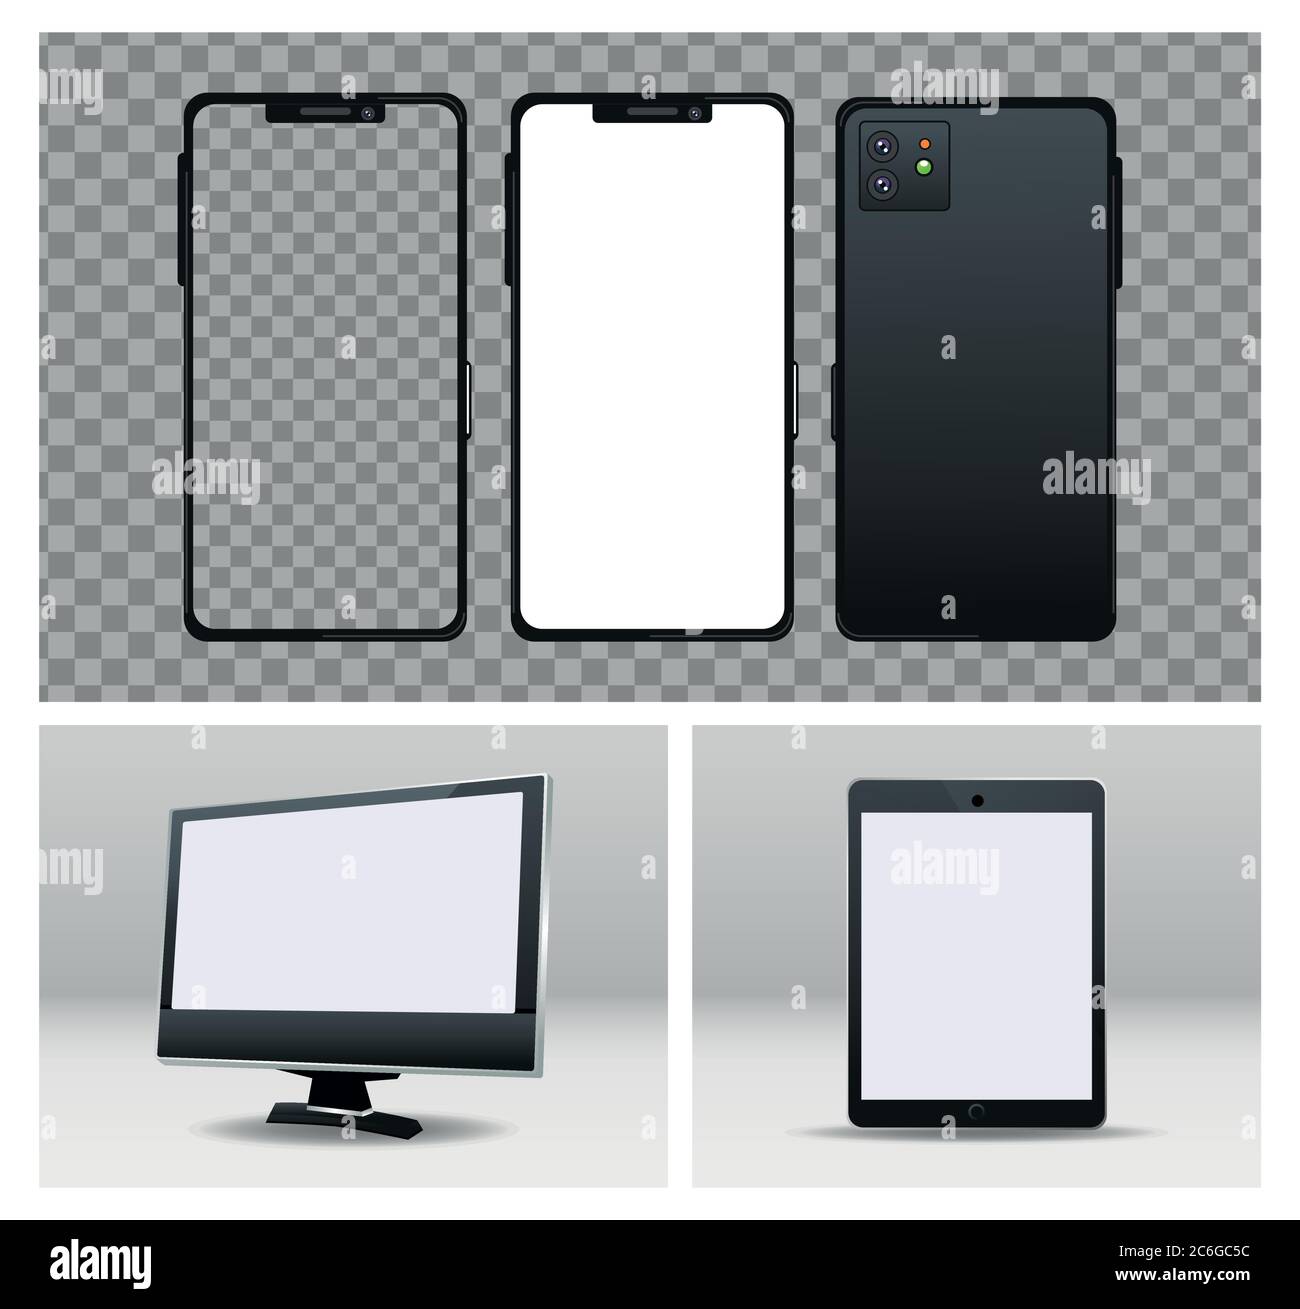 smartphones with desktop and tablet devices technology digital vector illustration design Stock Vector